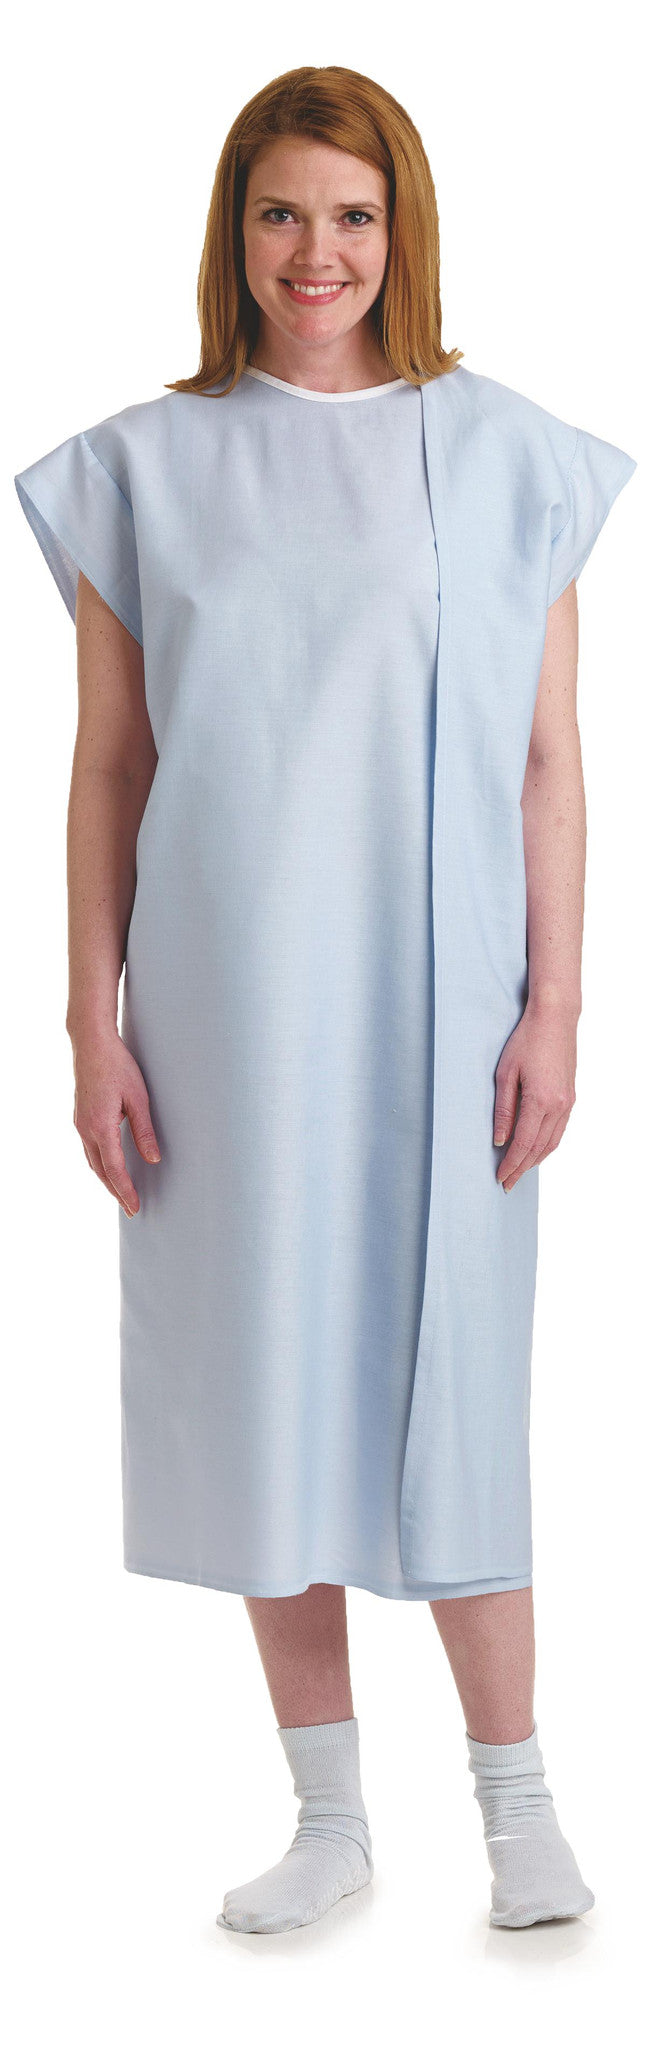 Sky Blue Jersey Knit Hospital Gown Gownie - ShopperBoard